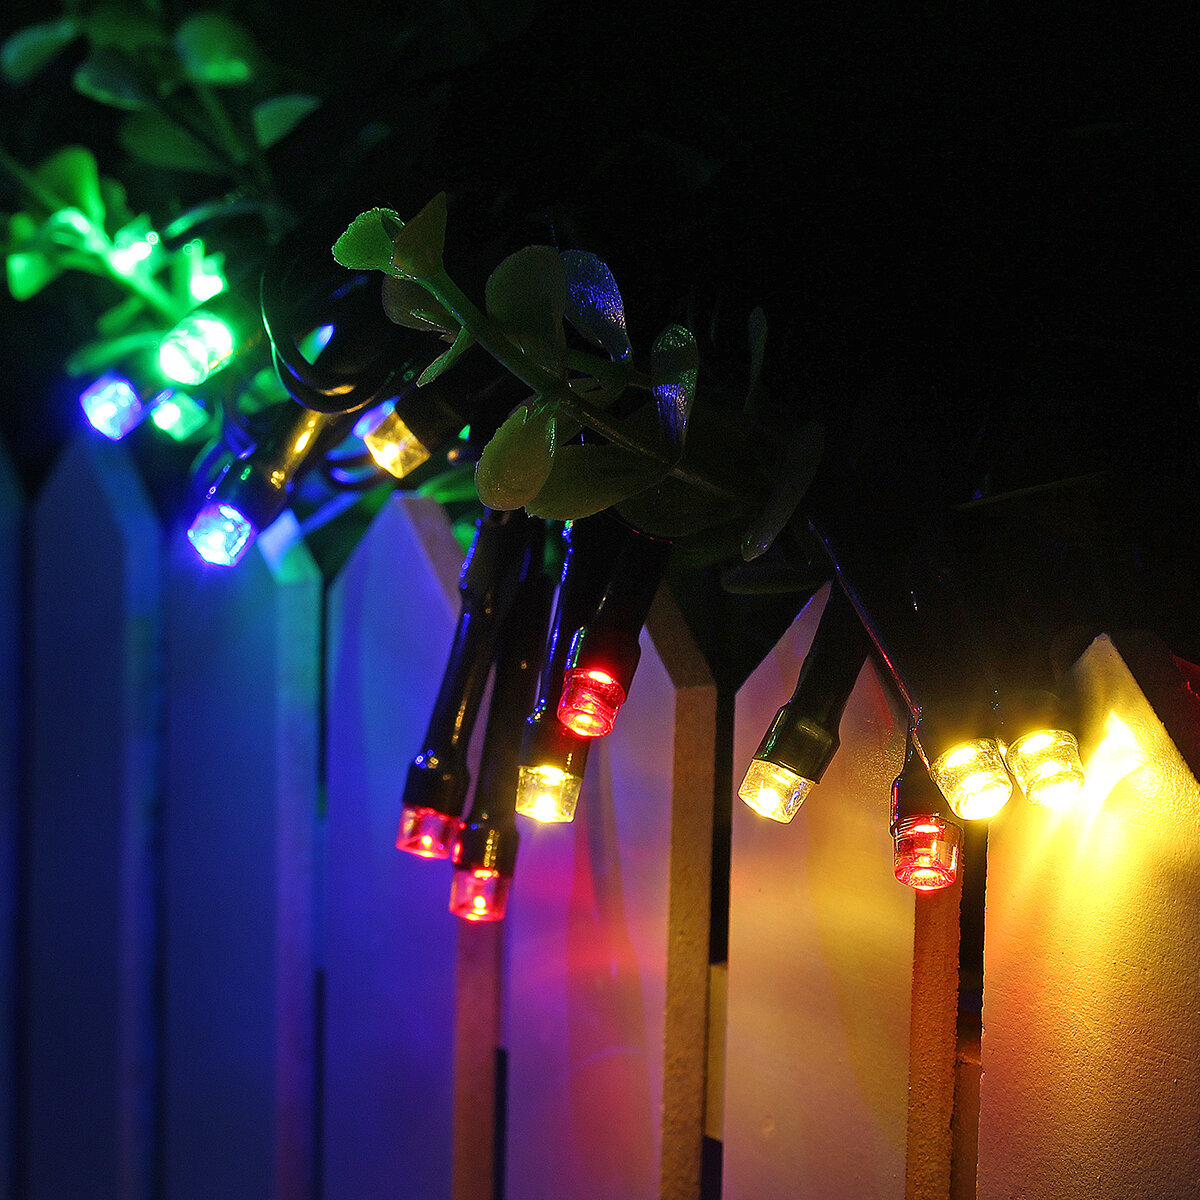 Solar القوة Fairy ضوء 8 Modes IP65 ضد للماء زينة عيد الميلاد في الأماكن المغلقة والهواء الطلق ضوءing للمنزل والحديقة وغر